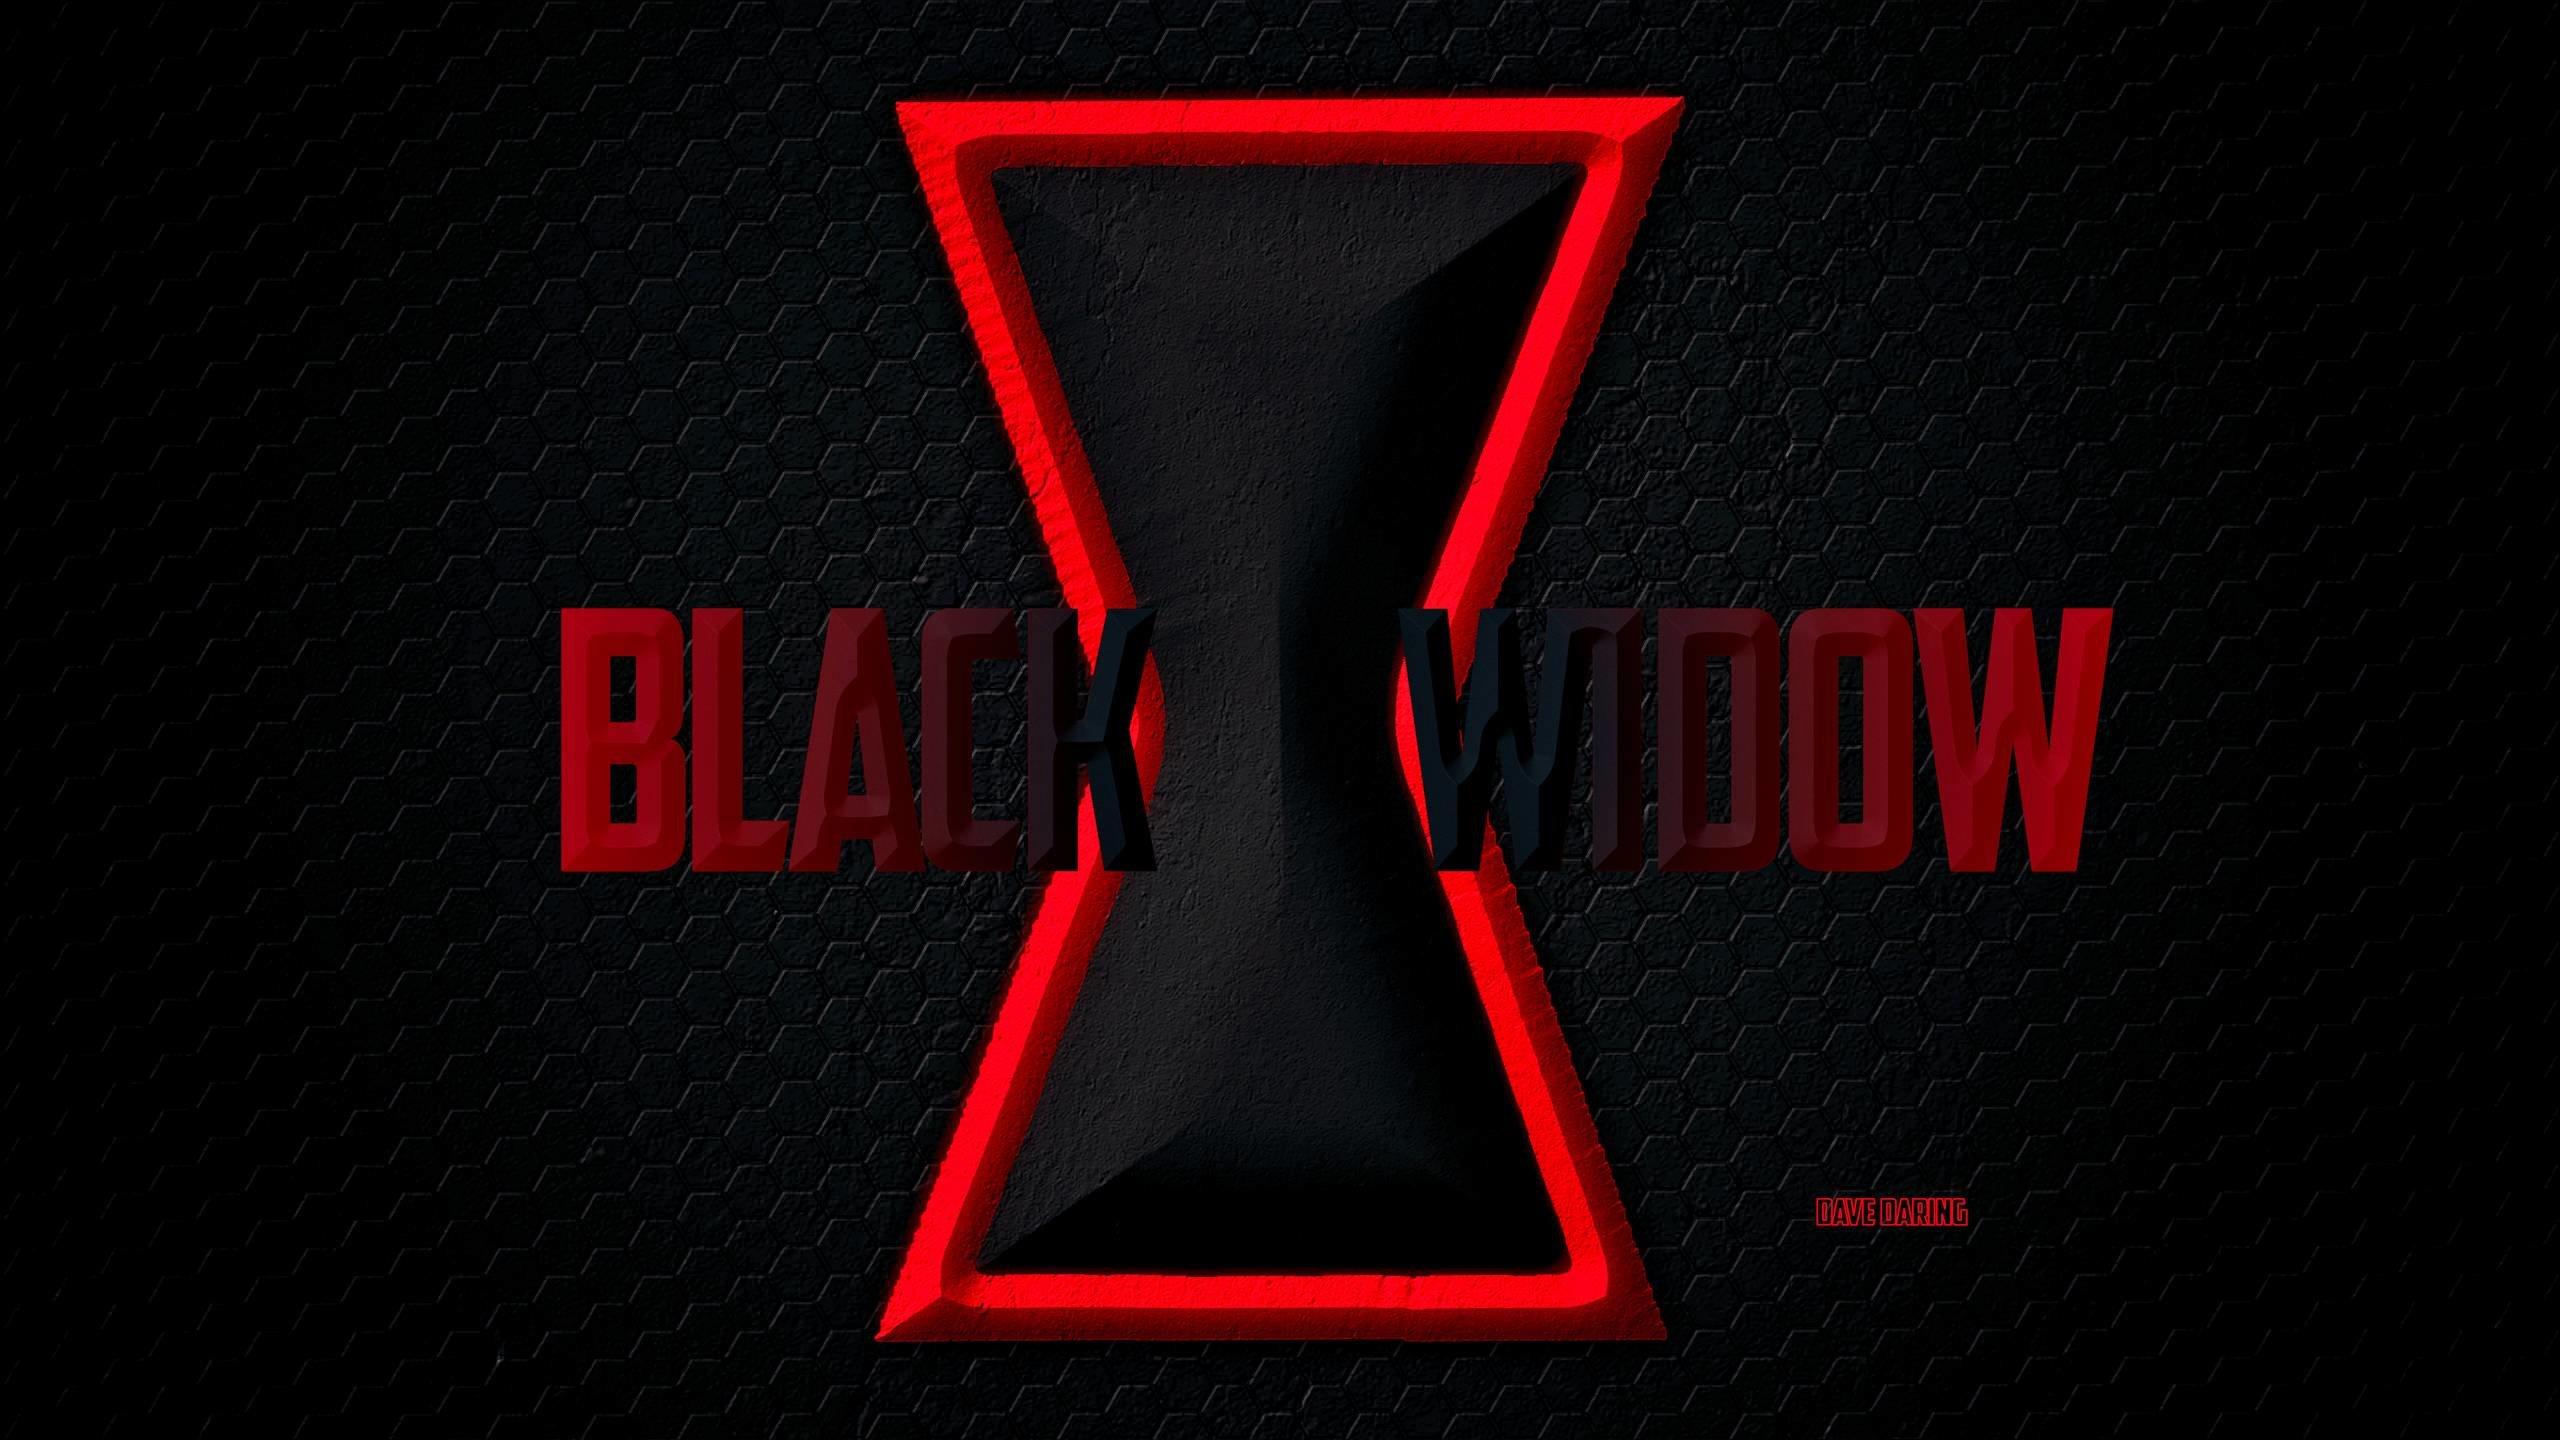 Black Widow wallpaper 2560x1440 desktop background